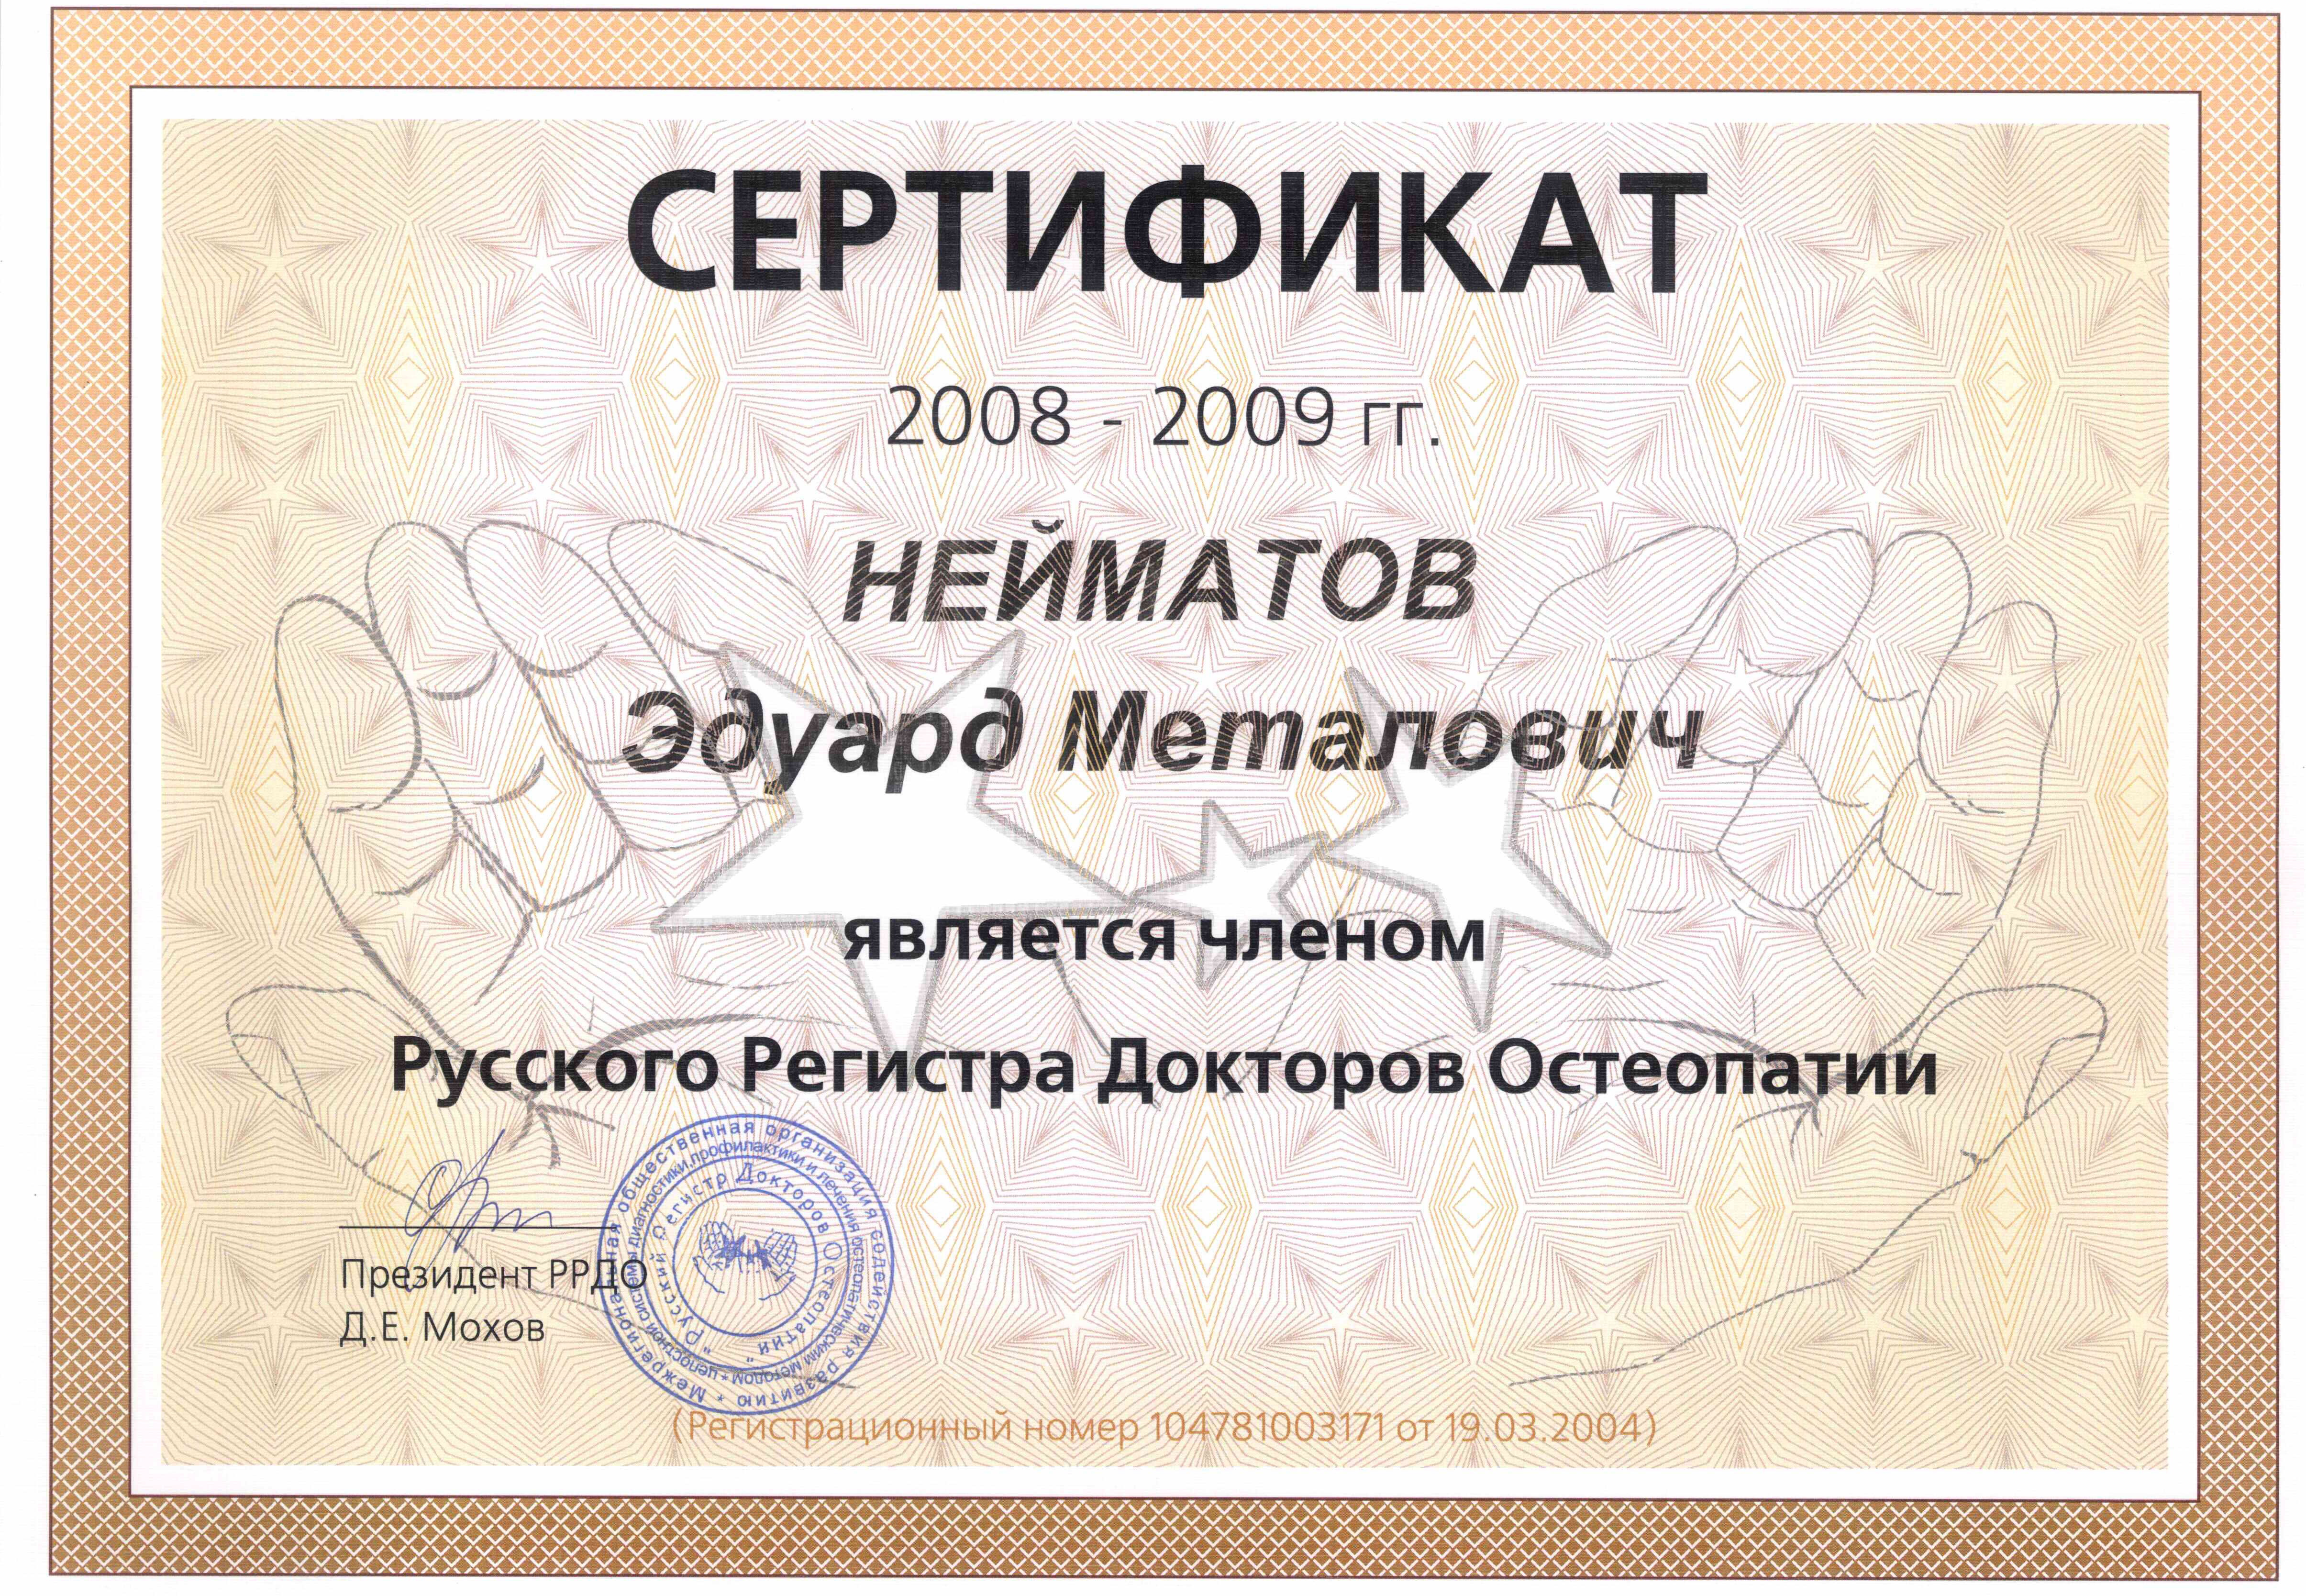 <p>Сертификат РРДО</p>